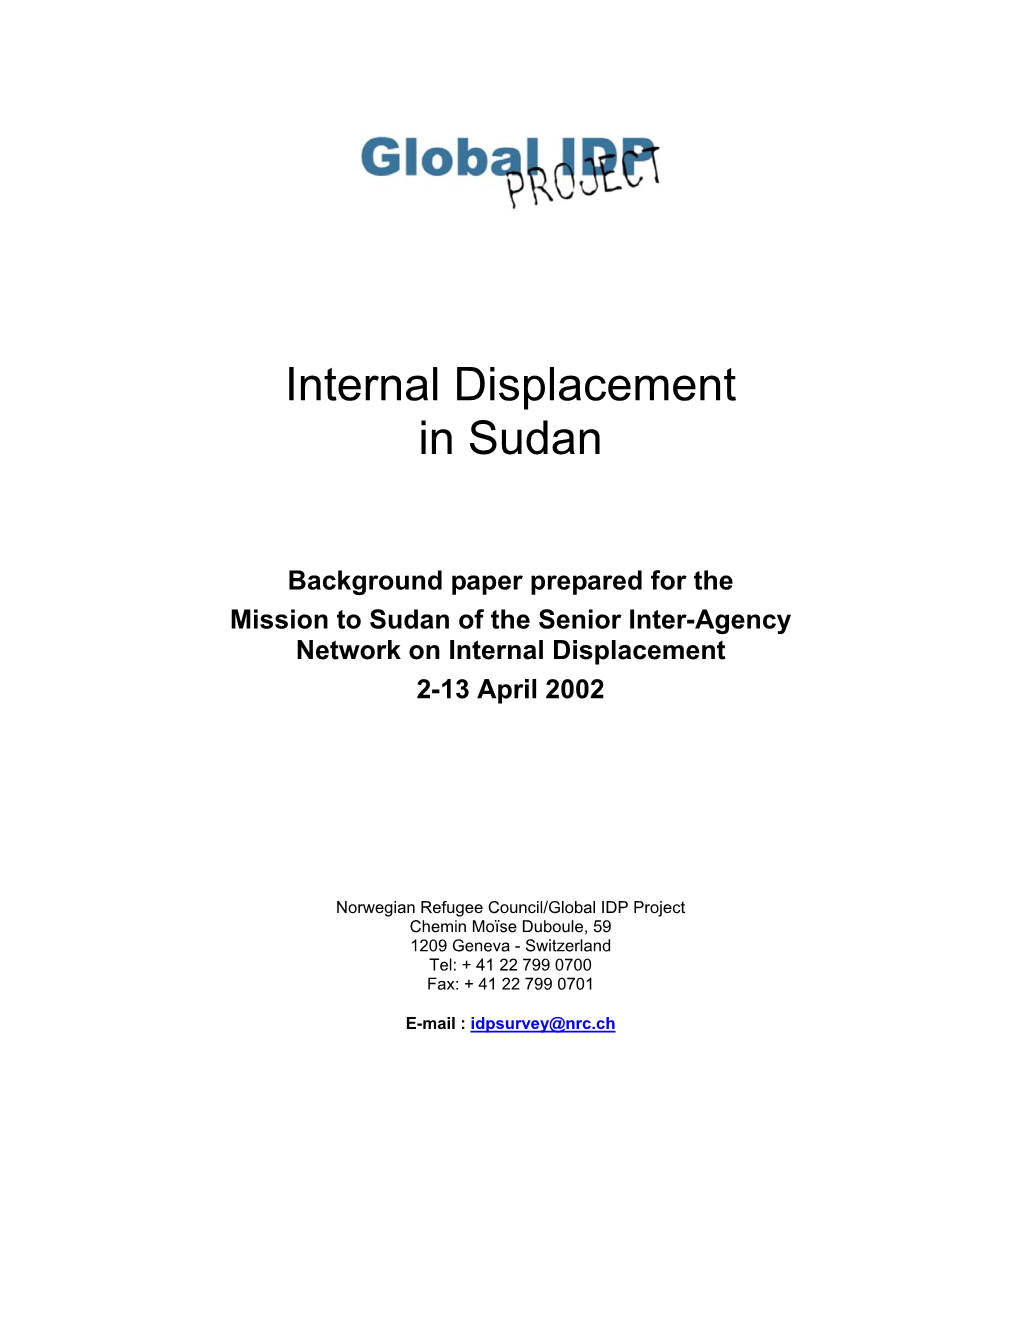 Internal Displacement in Sudan